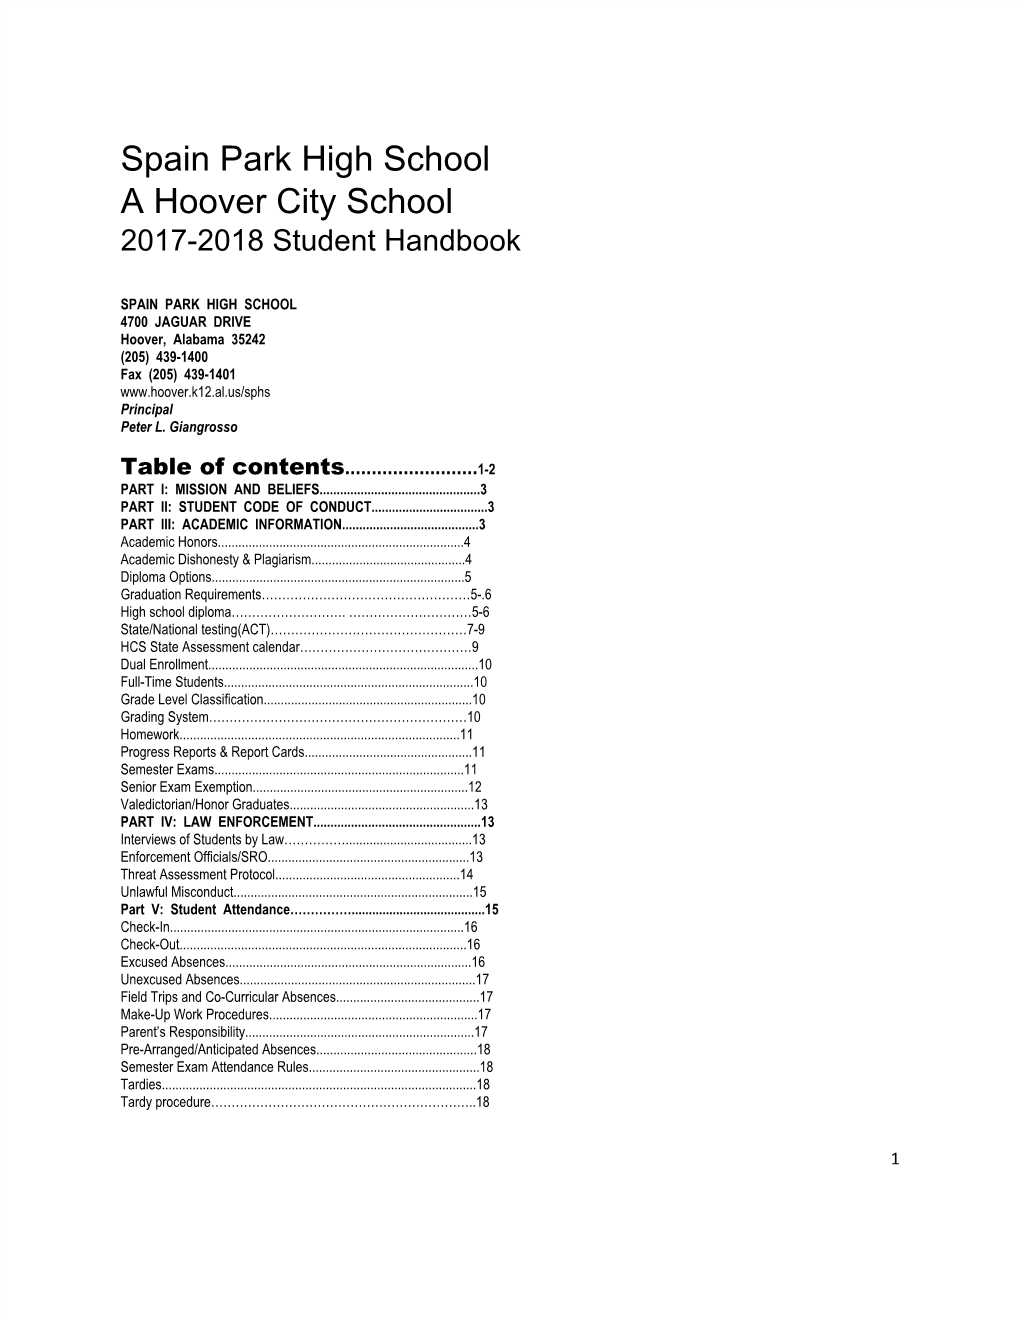 Spain Park High School a Hoover City School 2017-2018 Student Handbook